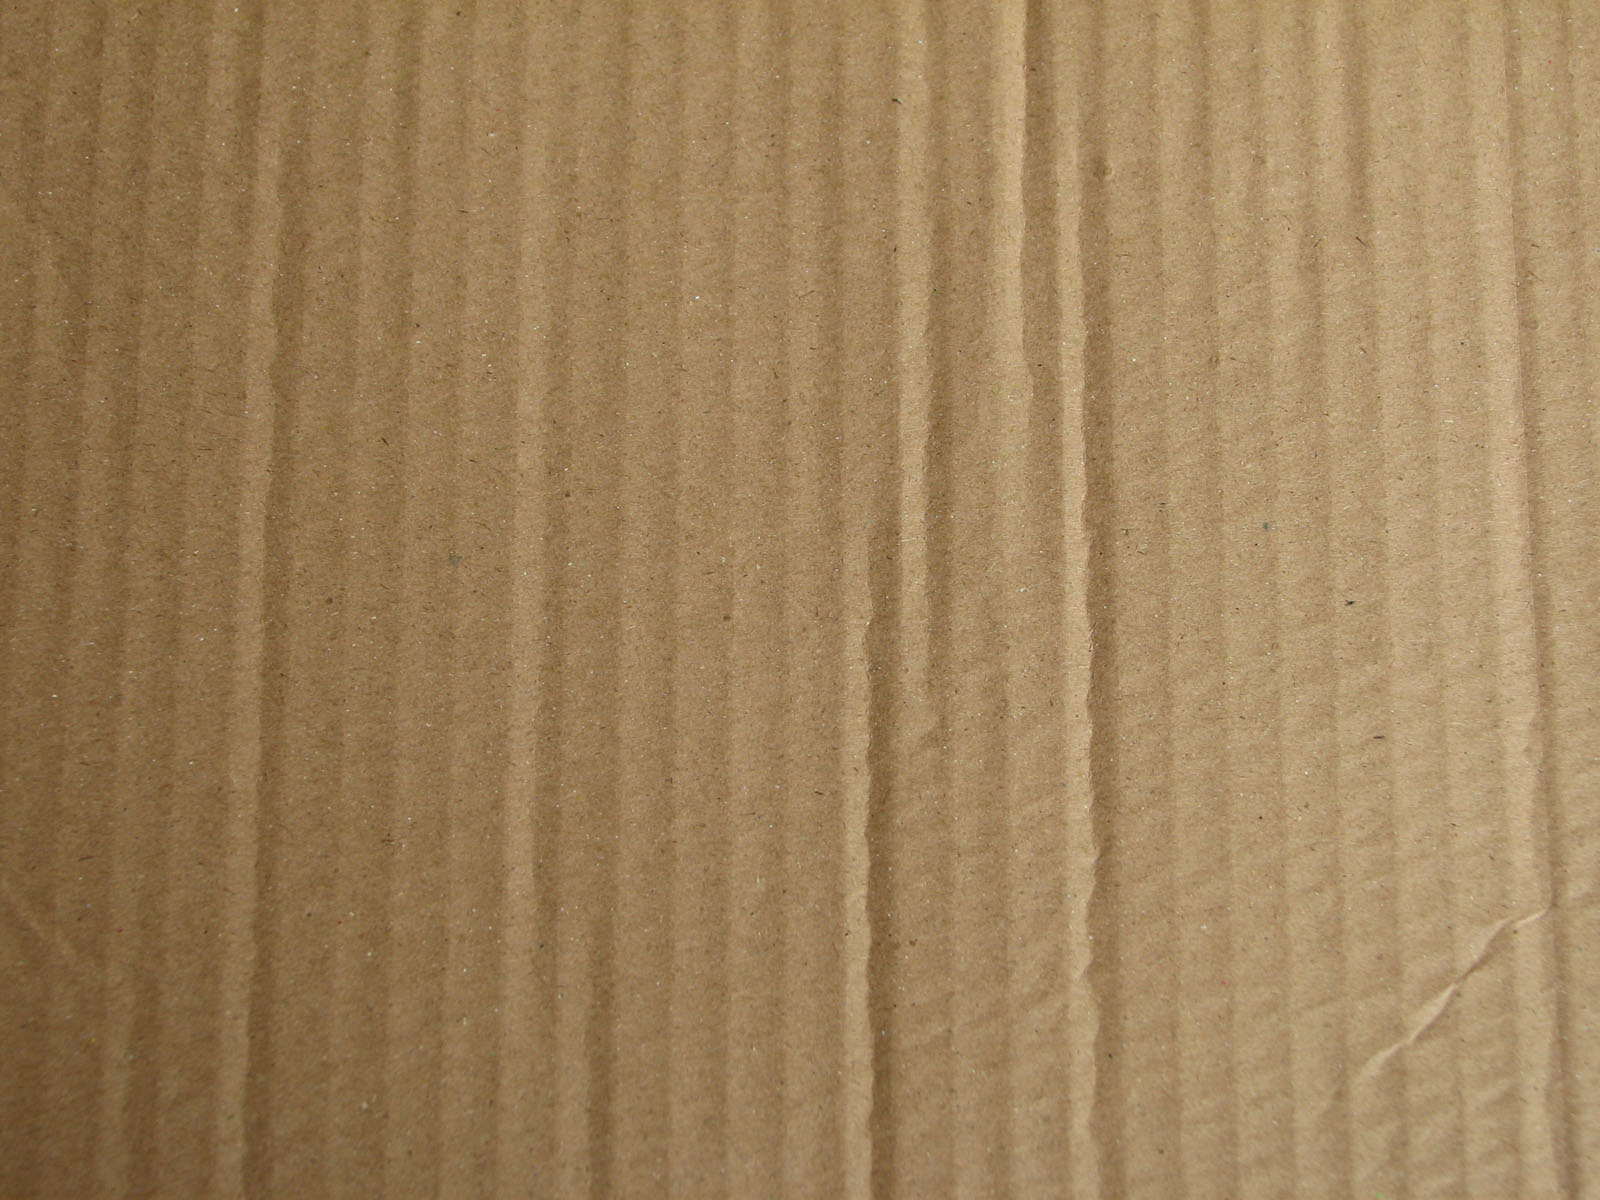 Cardboard-09 by 